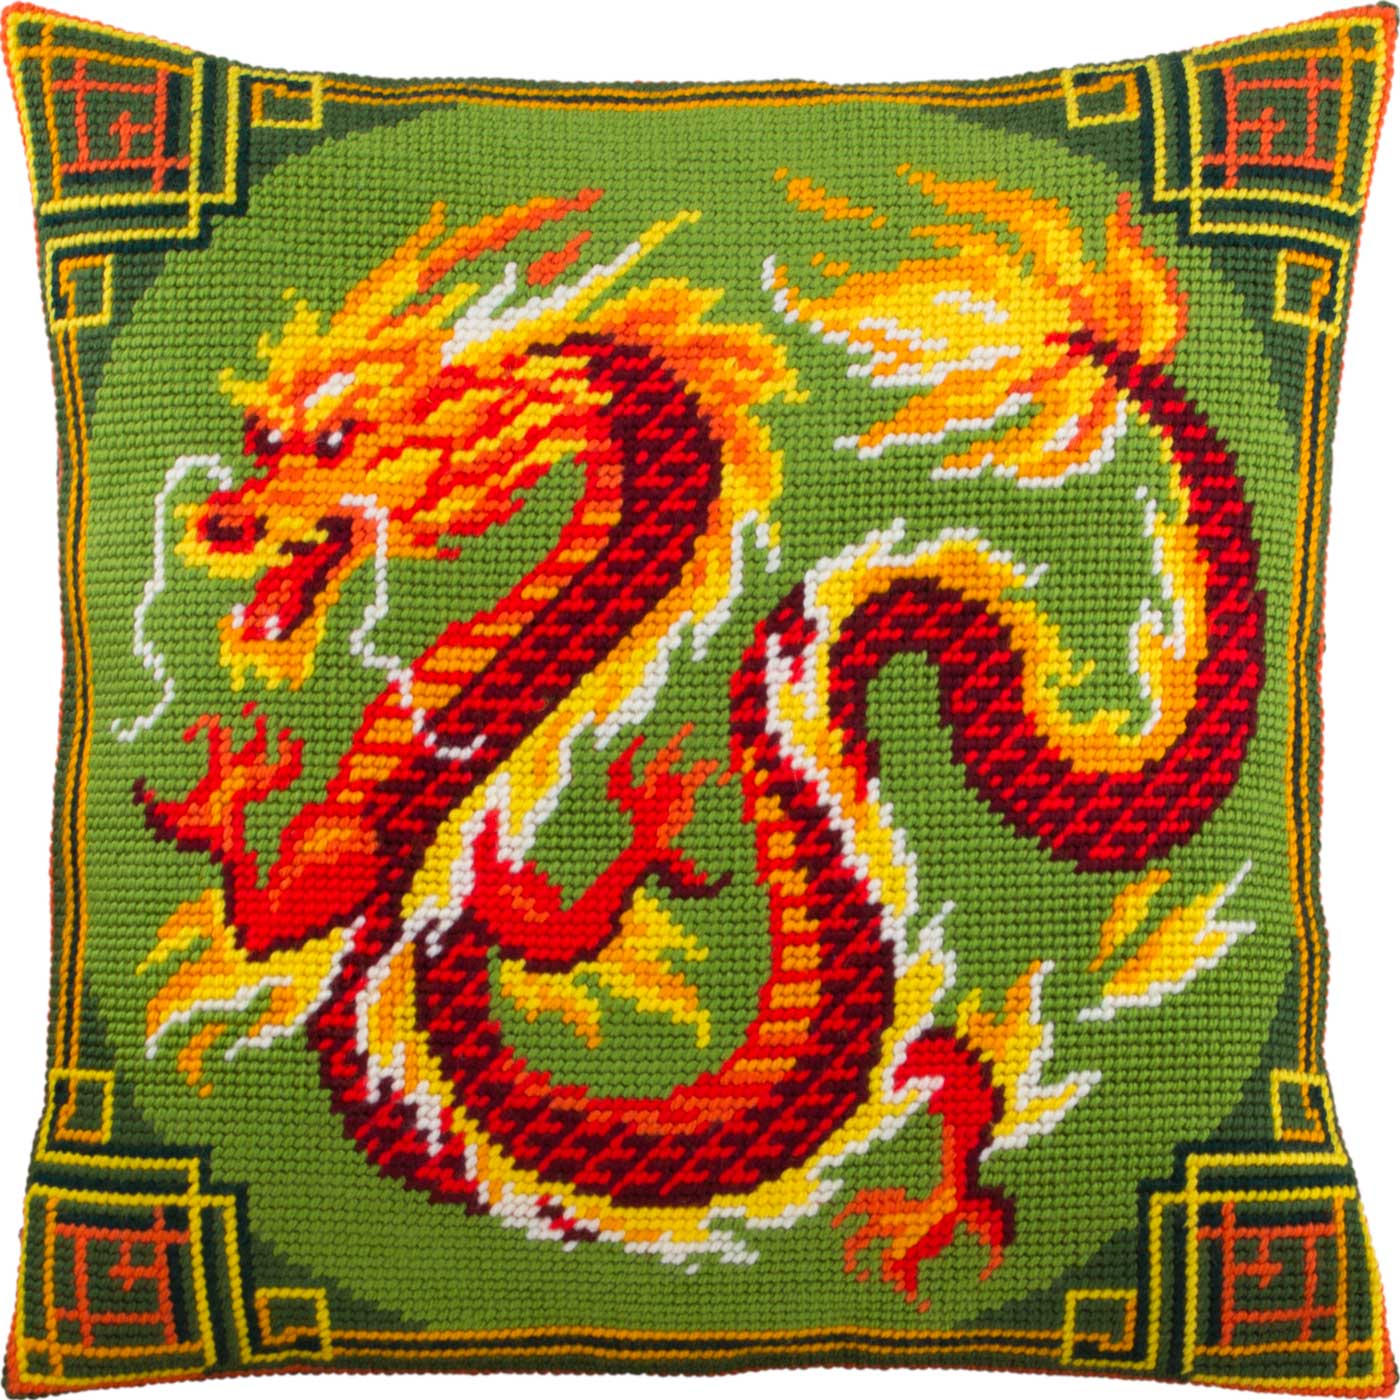 V291 — Китайський дракон